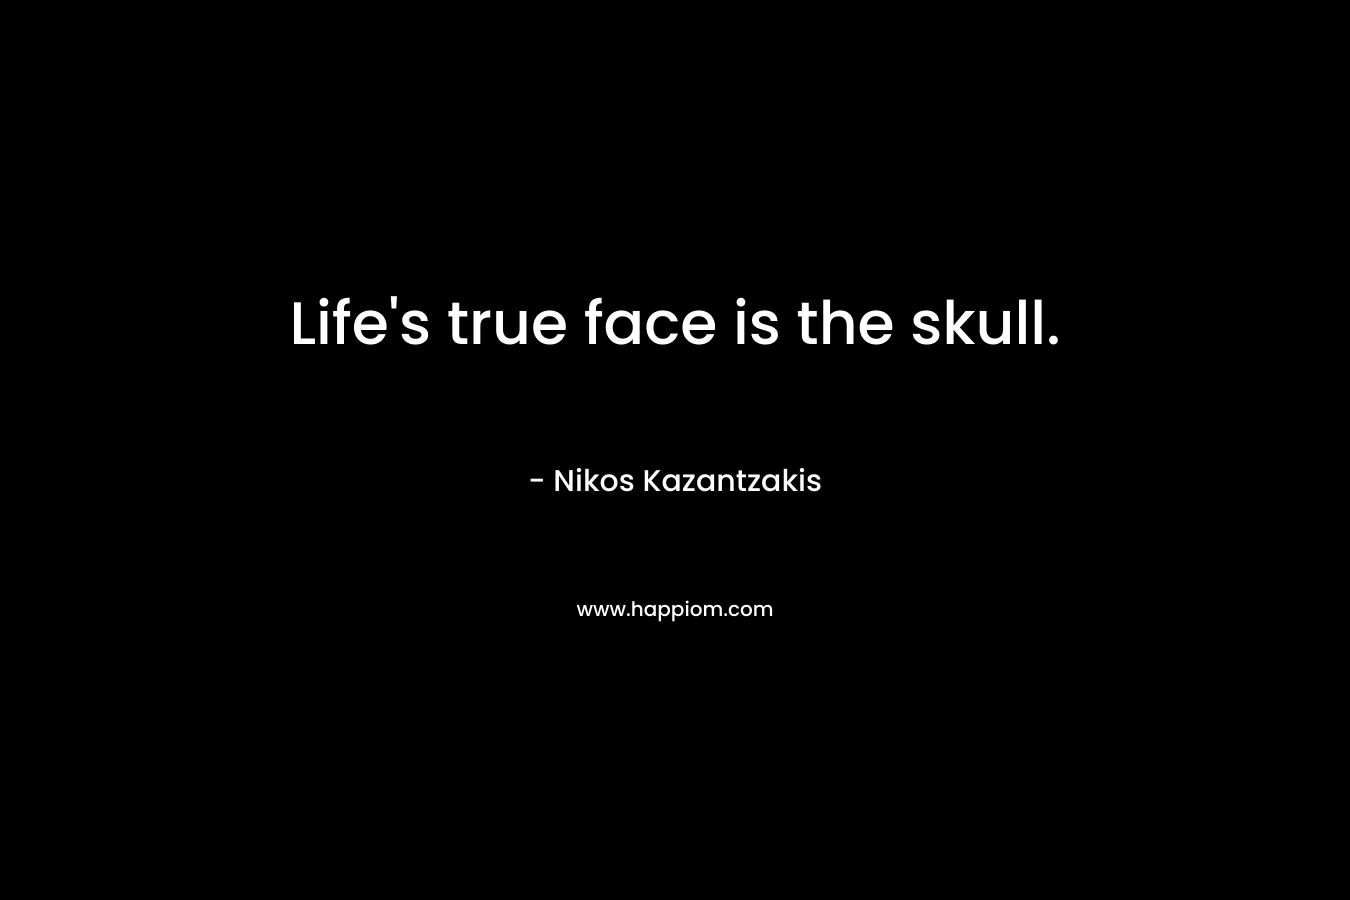 Life’s true face is the skull. – Nikos Kazantzakis